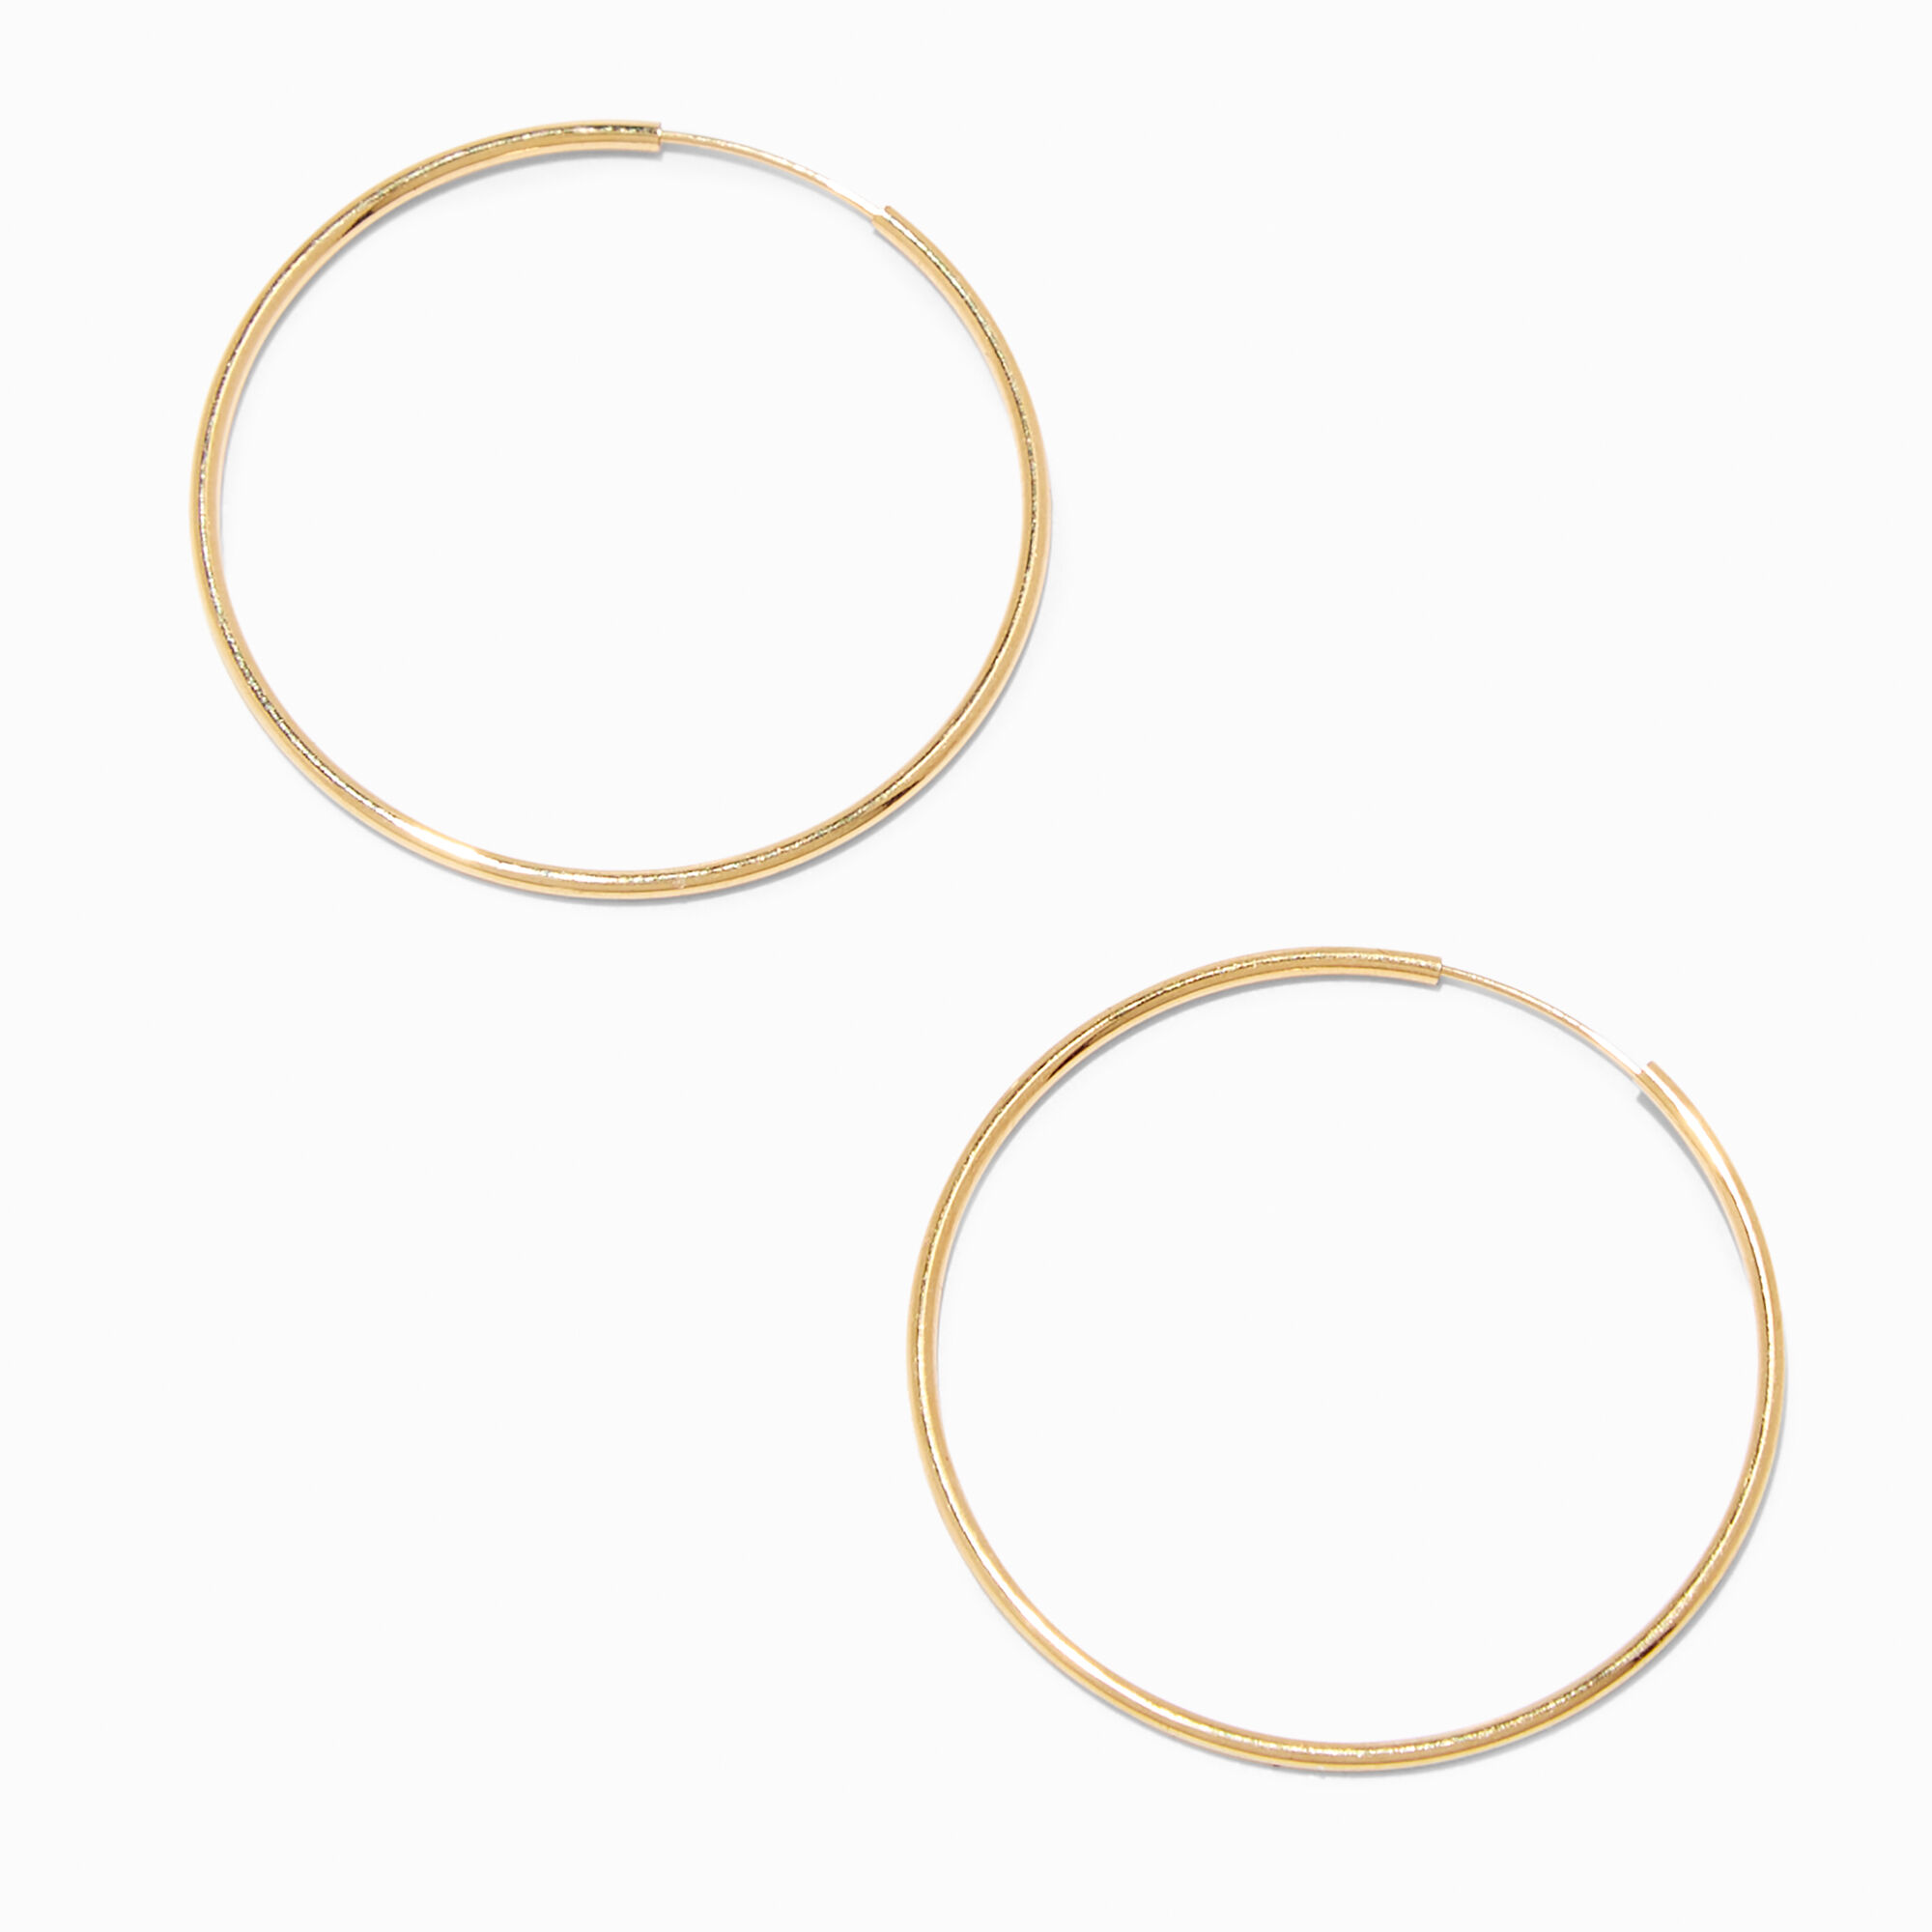 View Claires 18K Plated 30MM Sleek Hoop Earrings Gold information